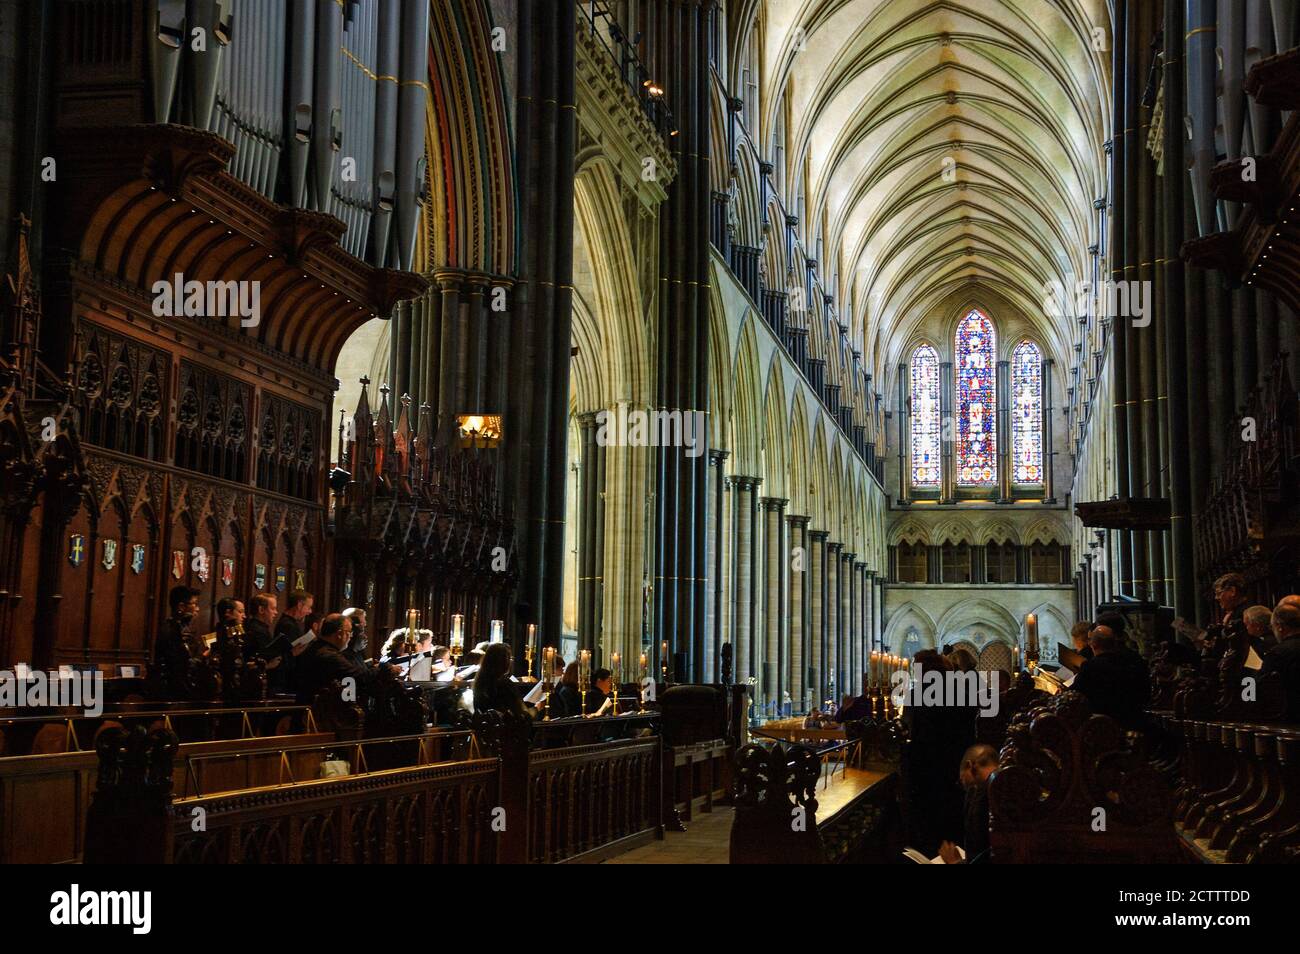 SALISBURY, UK - AUGUST 25, 2017: Choir rehearsal in famous Salisbury cathedral. Stock Photo